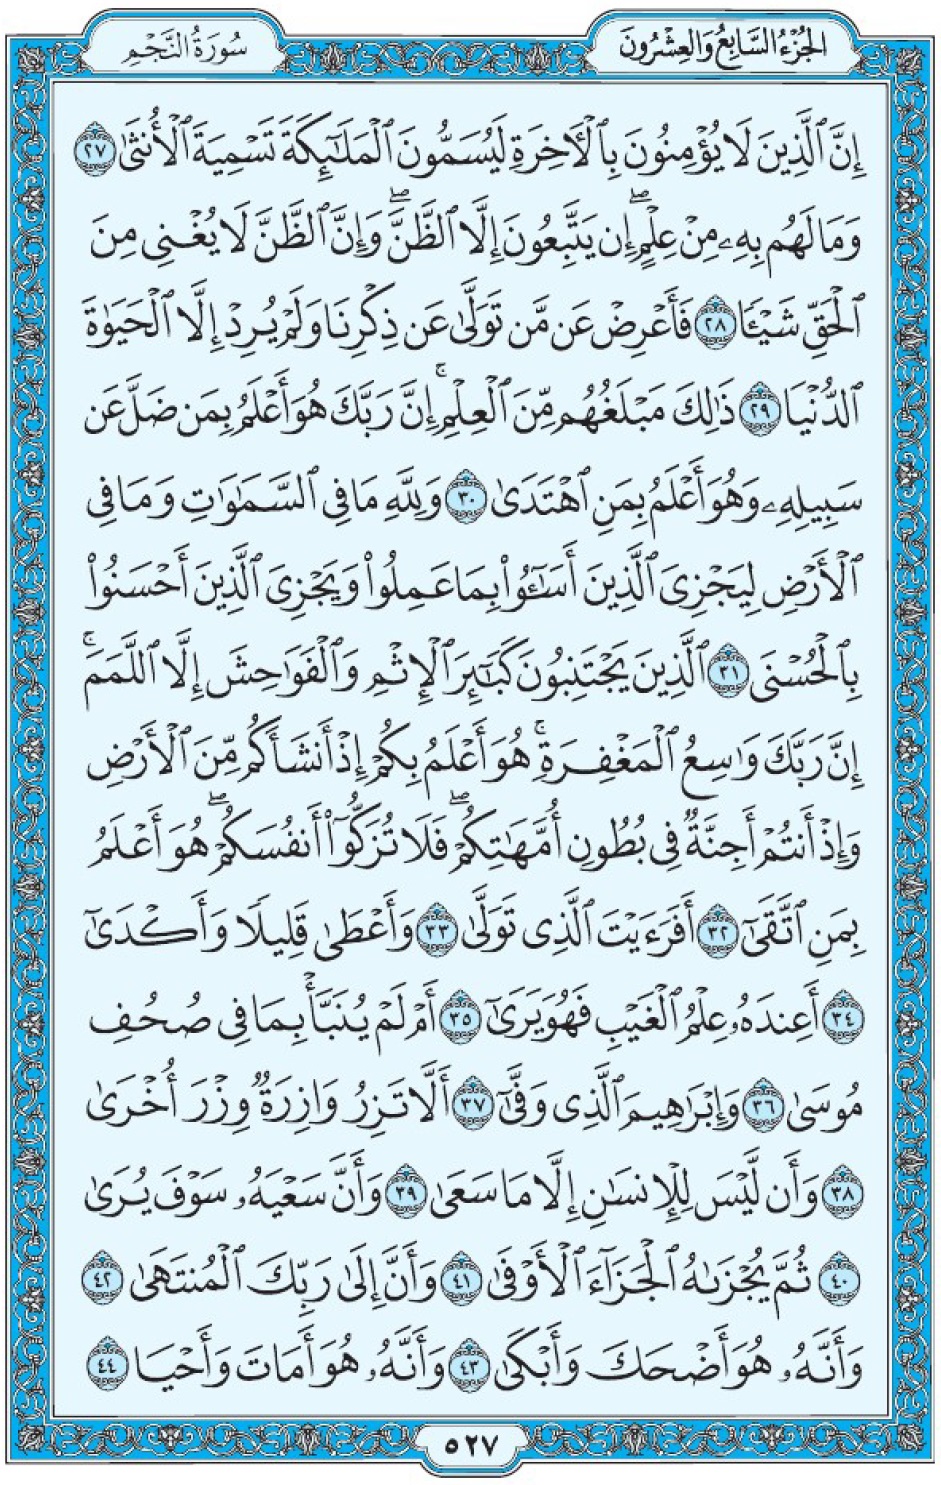 Коран Мединский мусхаф страница 527, сура ан-Наджм, аят 27-44